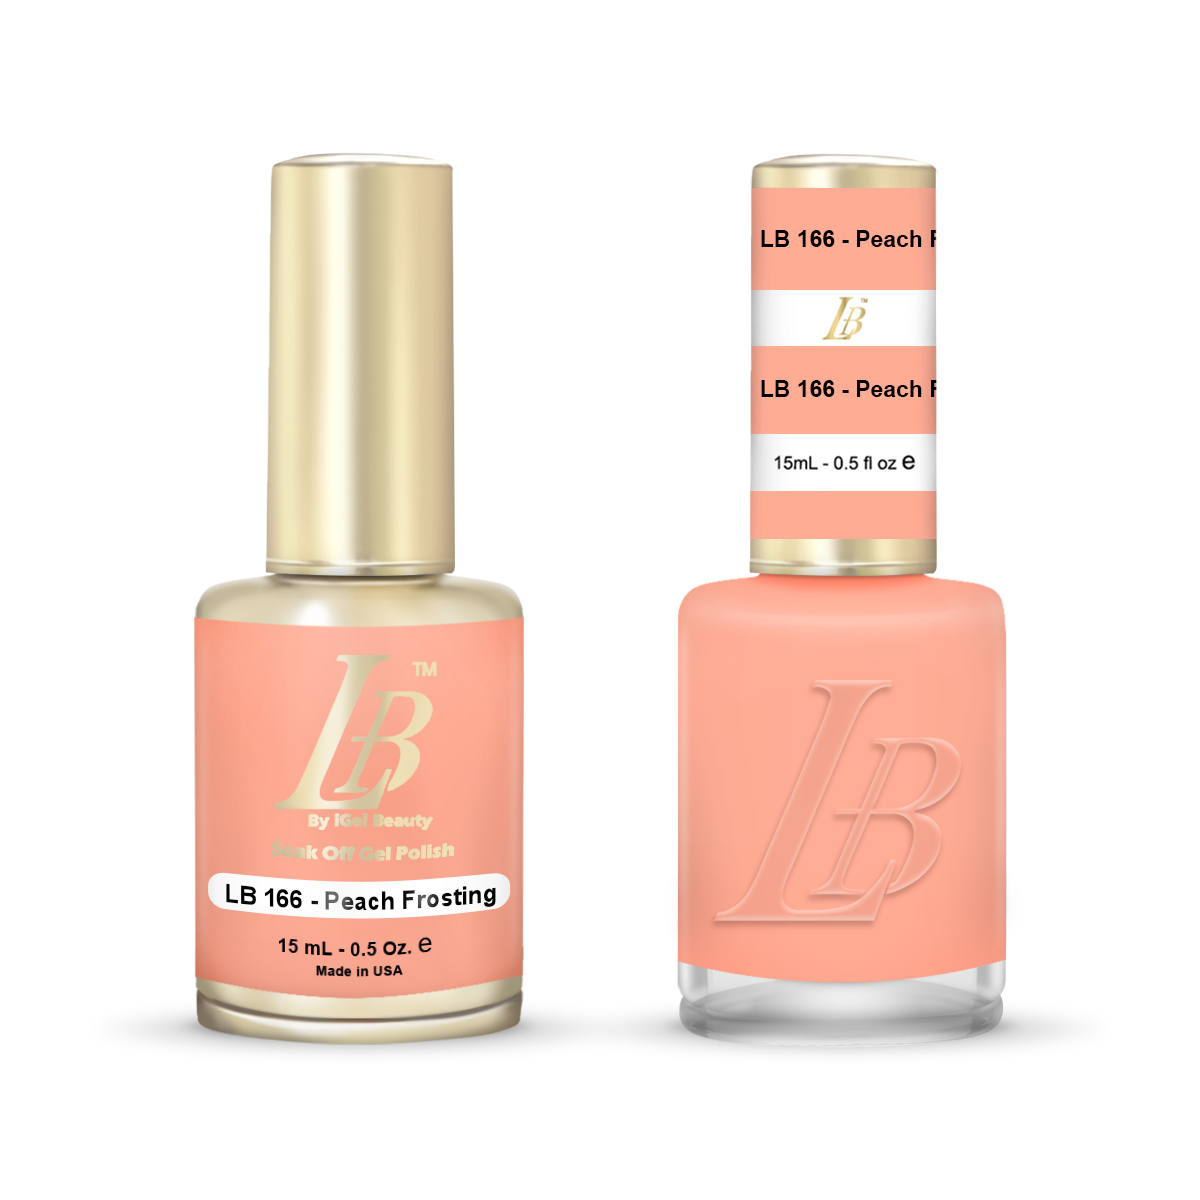 LB Duo - LB166 Peach Frosting